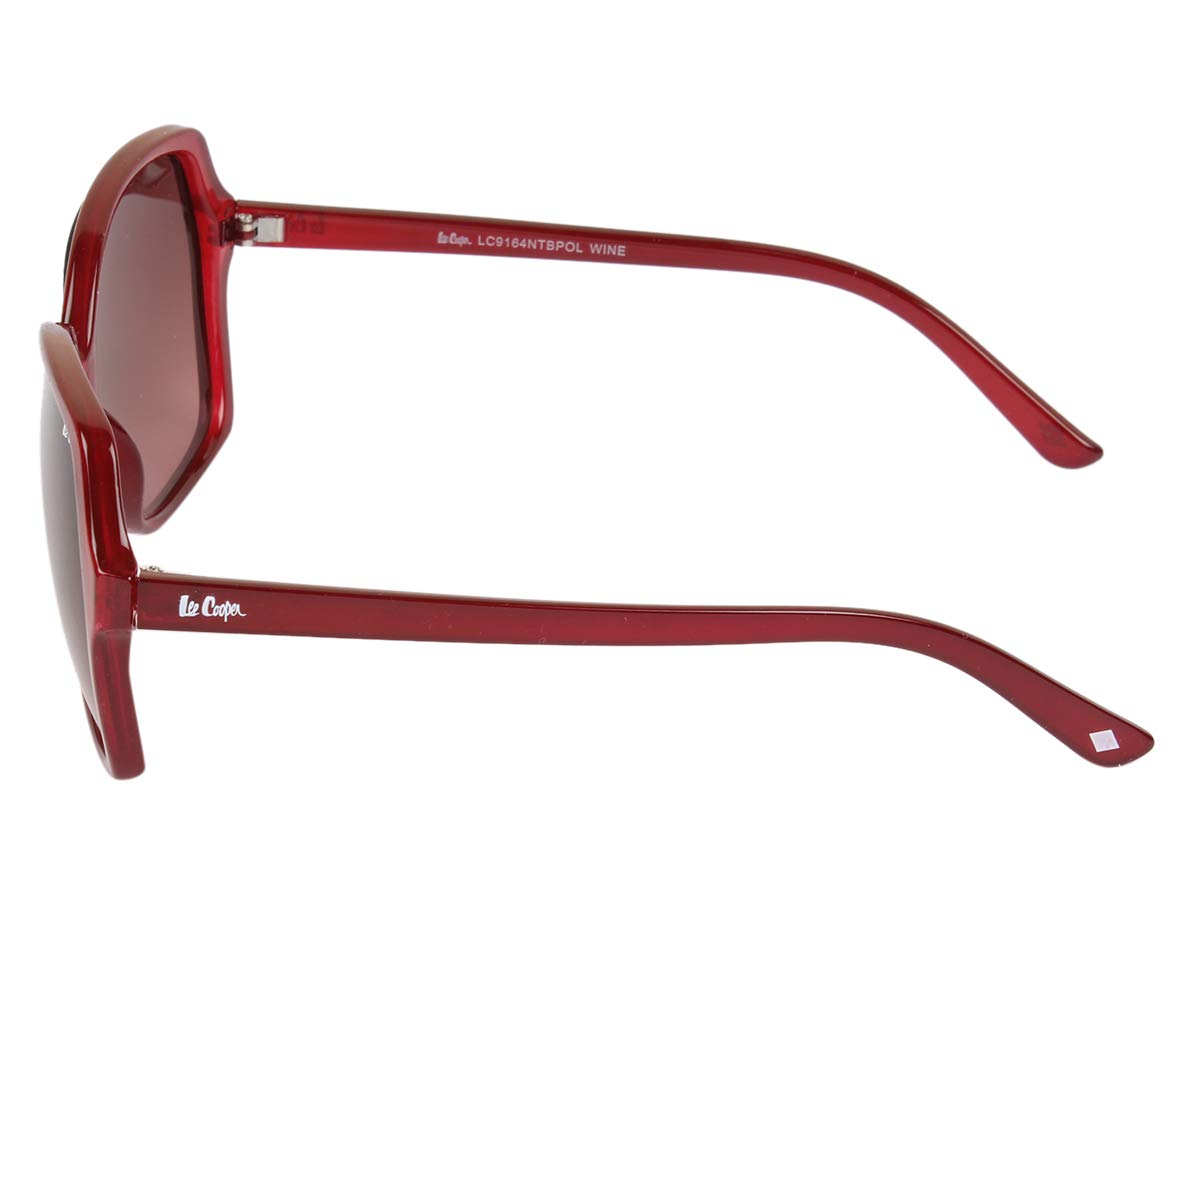 Lee Cooper Women's UV Protected Square Full Rim Sunglasses (Wine) (Lens Color - Pink) (Lens Size - 58*16*138 MM) (Pack Of 1) (LC9164NTPOL WINE)